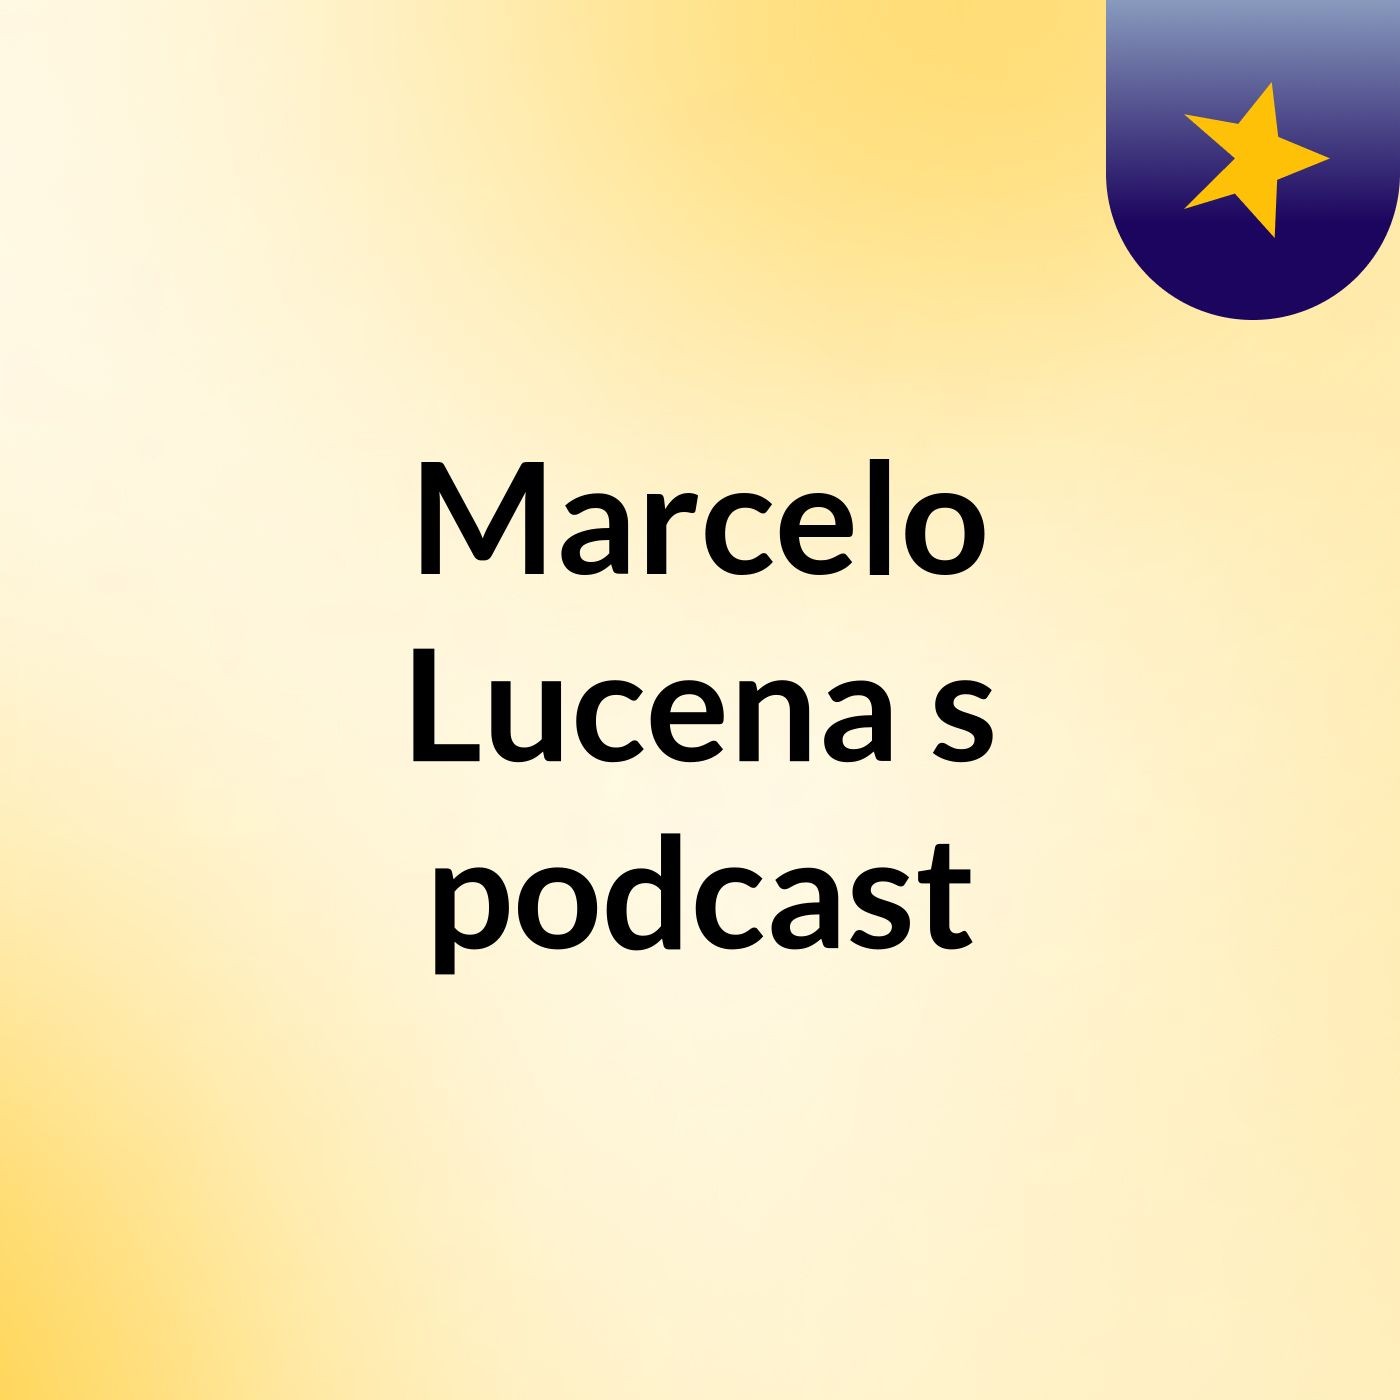 Marcelo Lucena's podcast